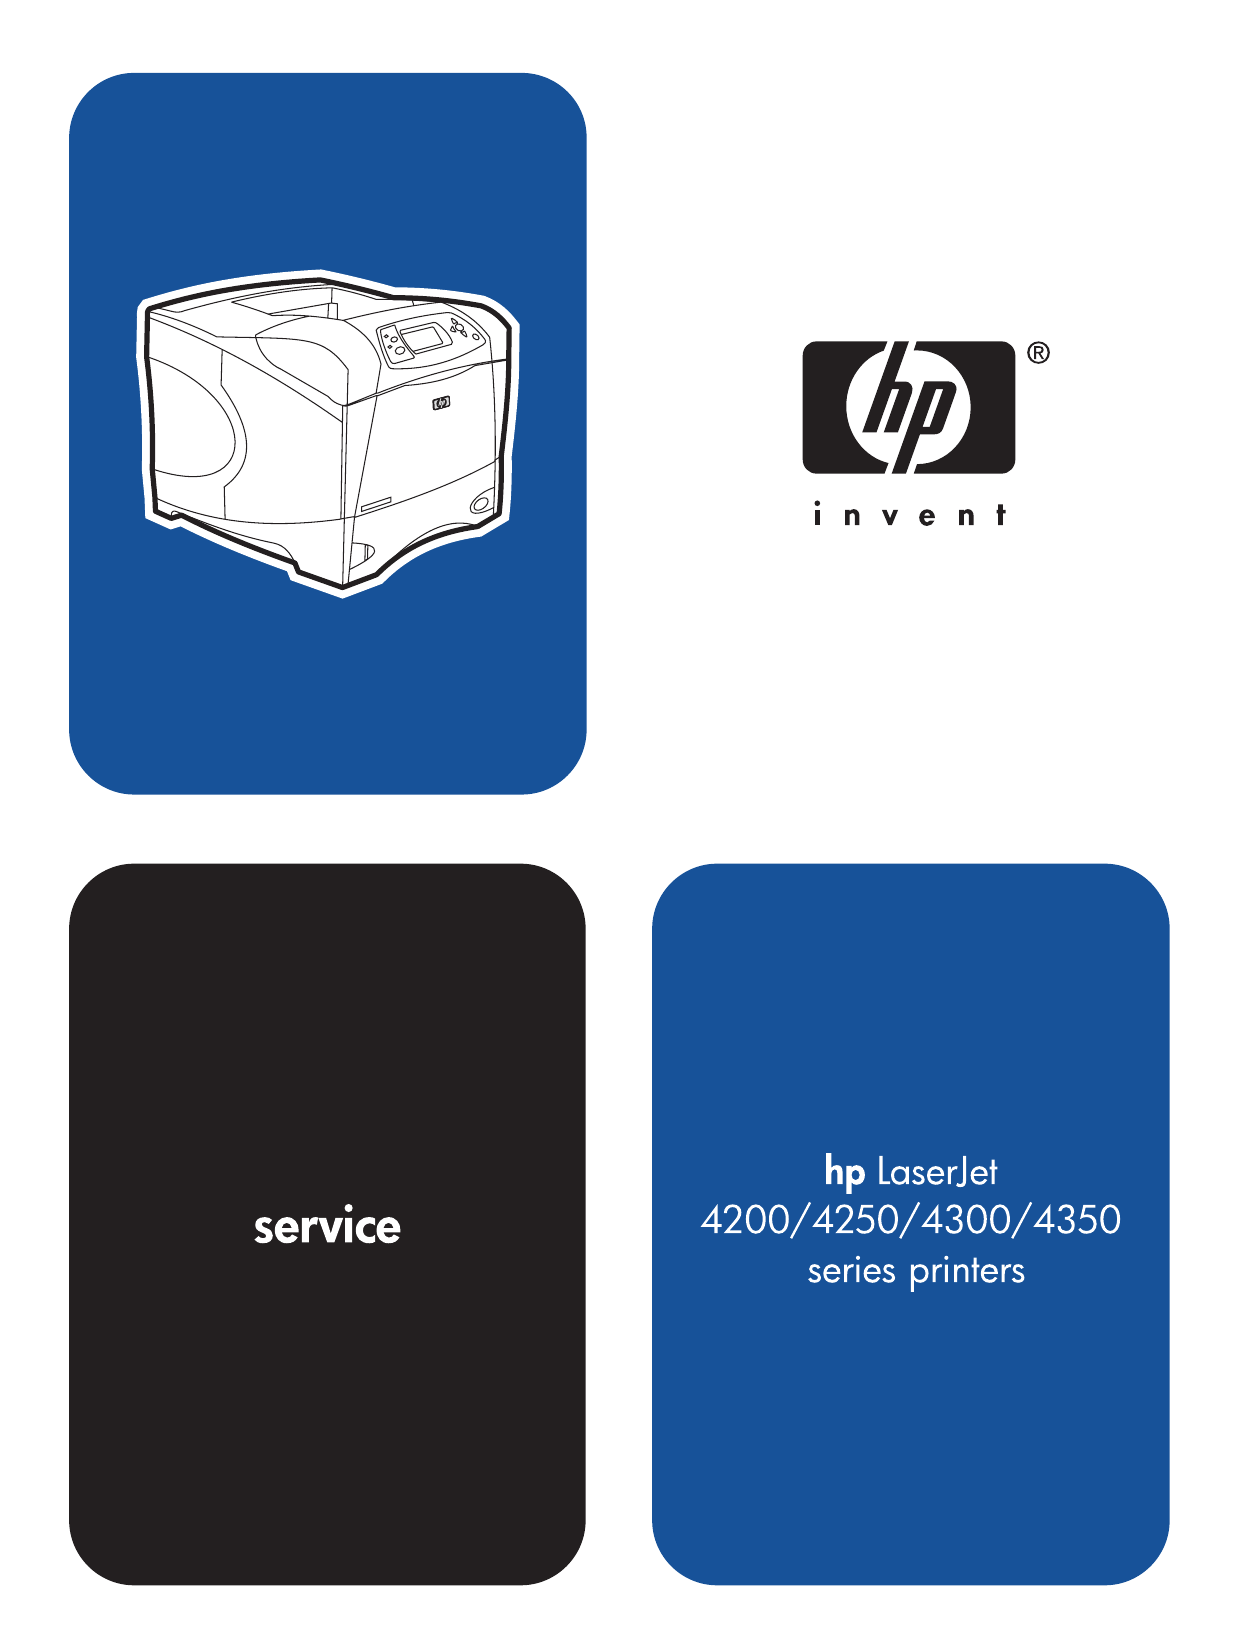 HP LaserJet 4200, 4250, 4300, 4350 monochrome laser printer service guide Preview image 1